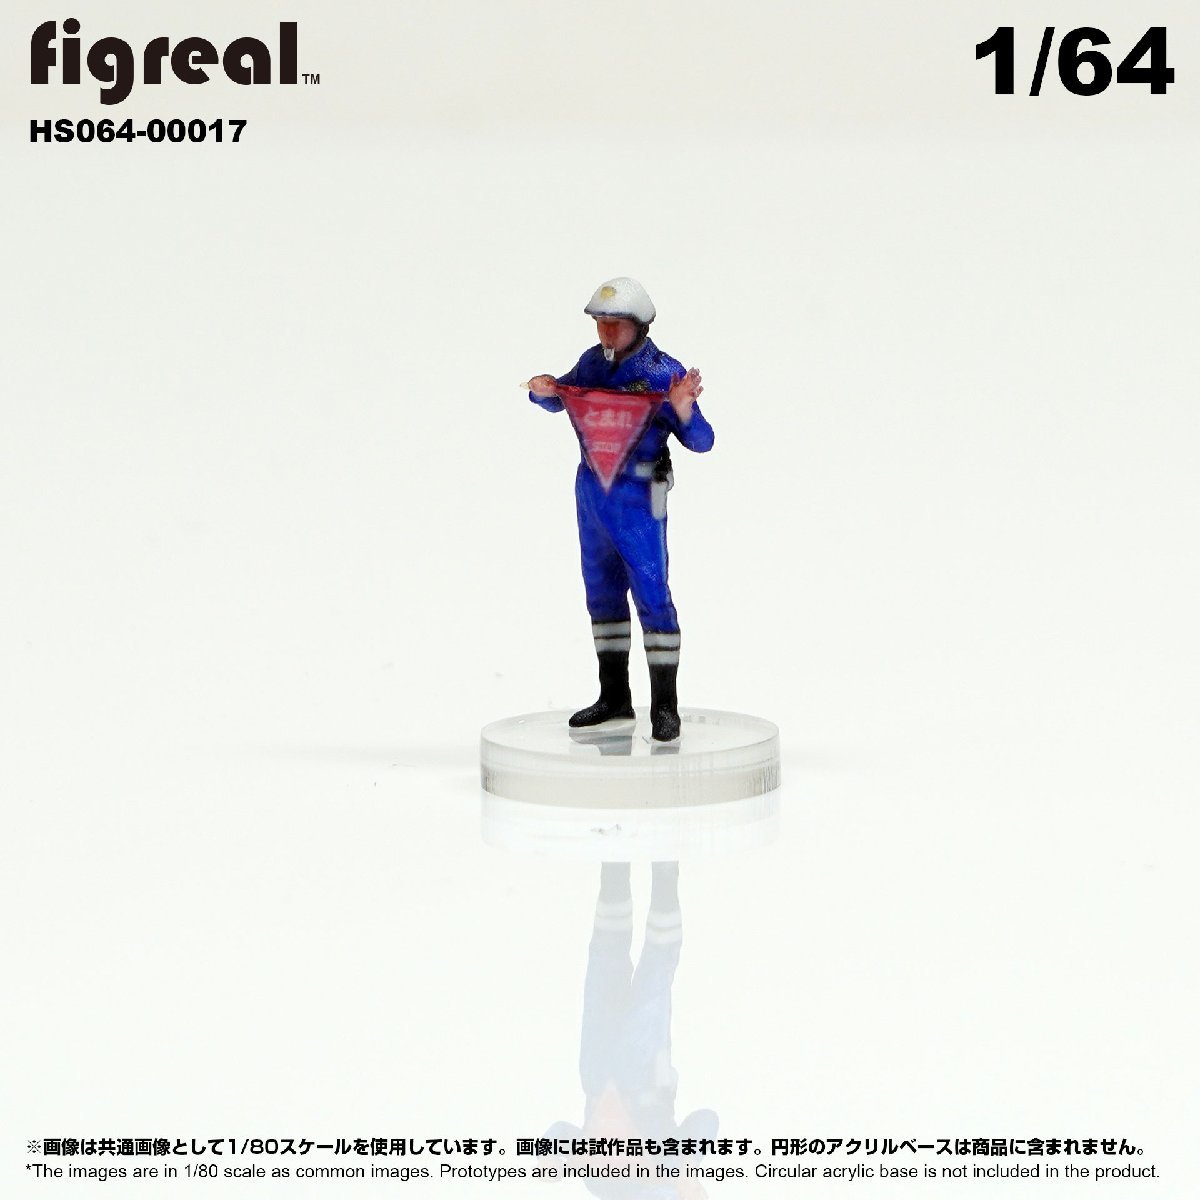 HS064-00017 figreal 日本交通機動隊 1/64 高精細フィギュアの画像3